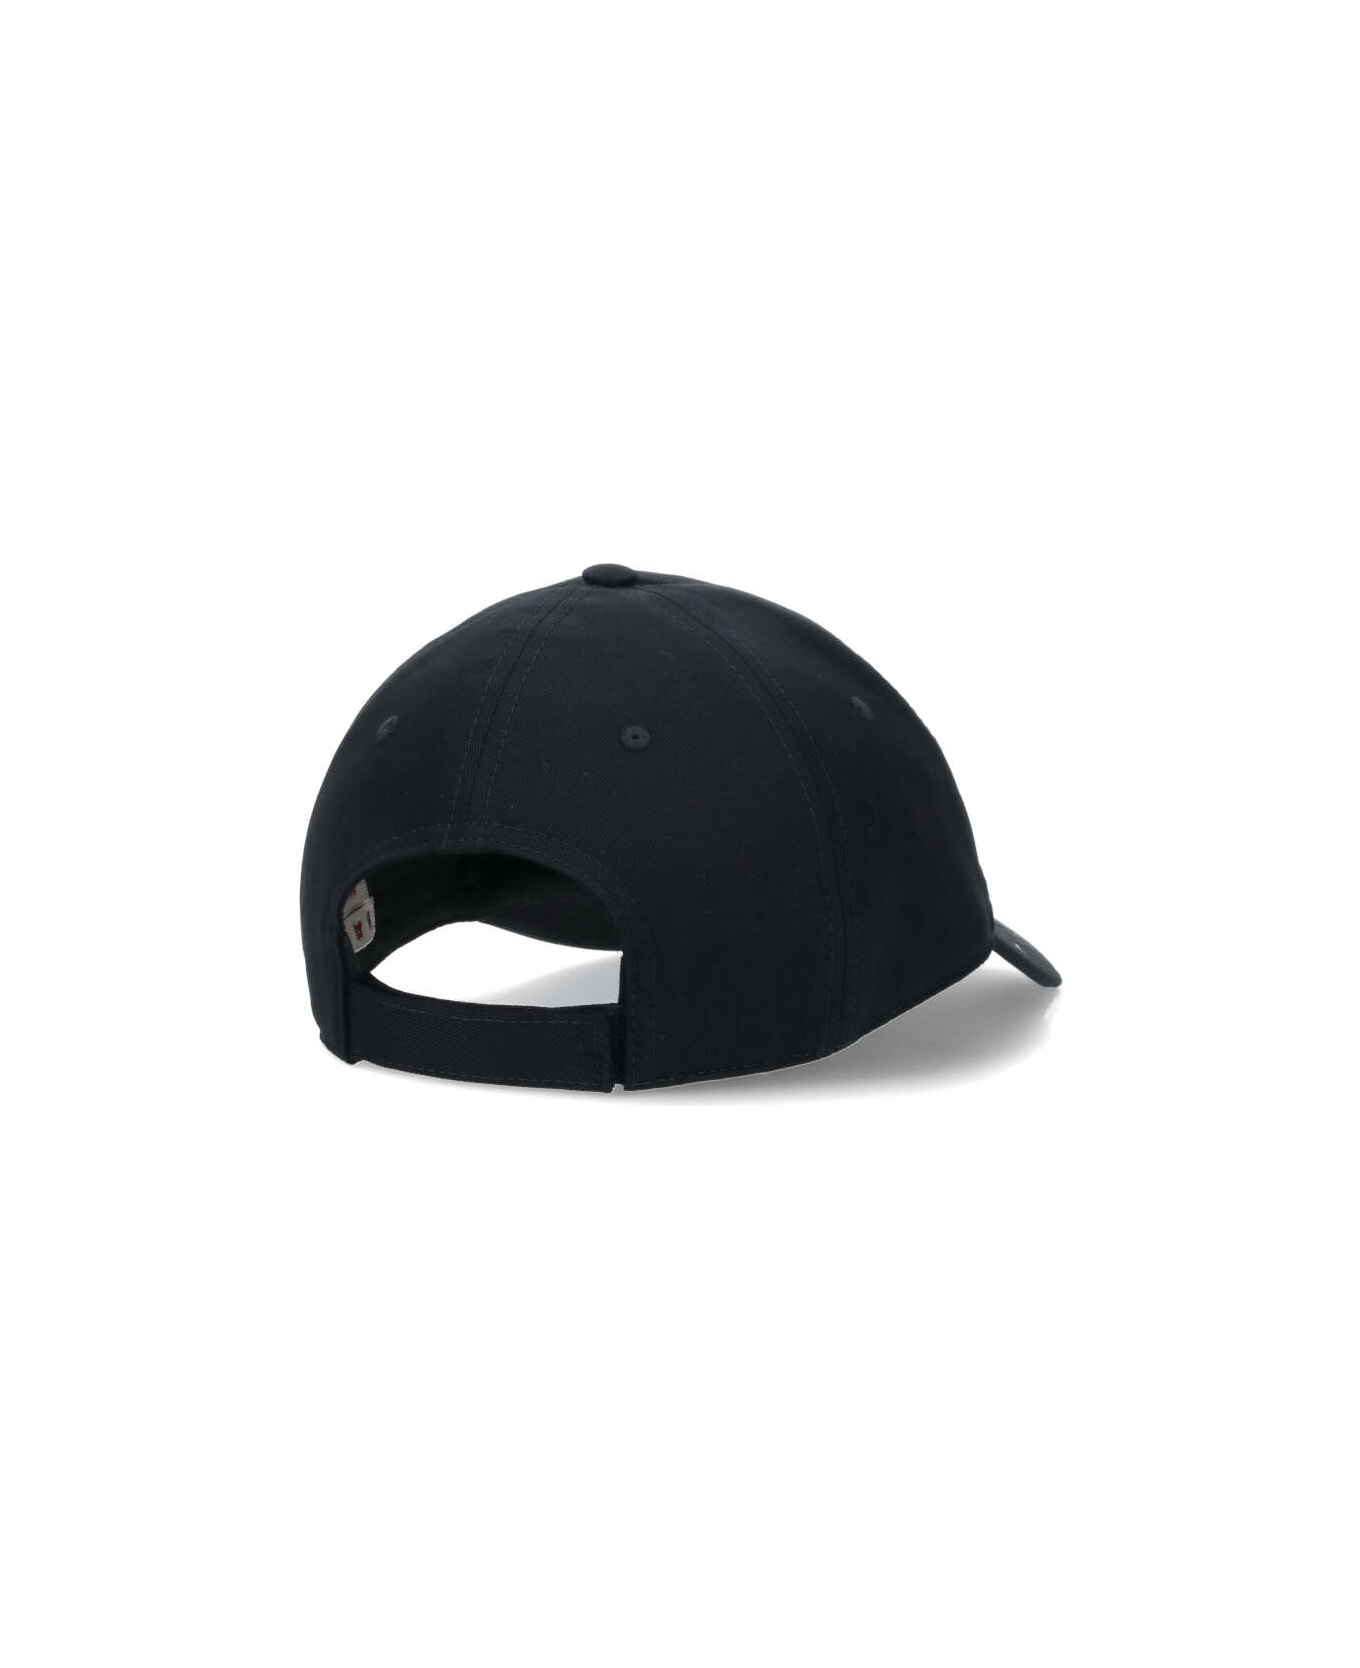 Marni Logo Baseball Cap - Black 帽子